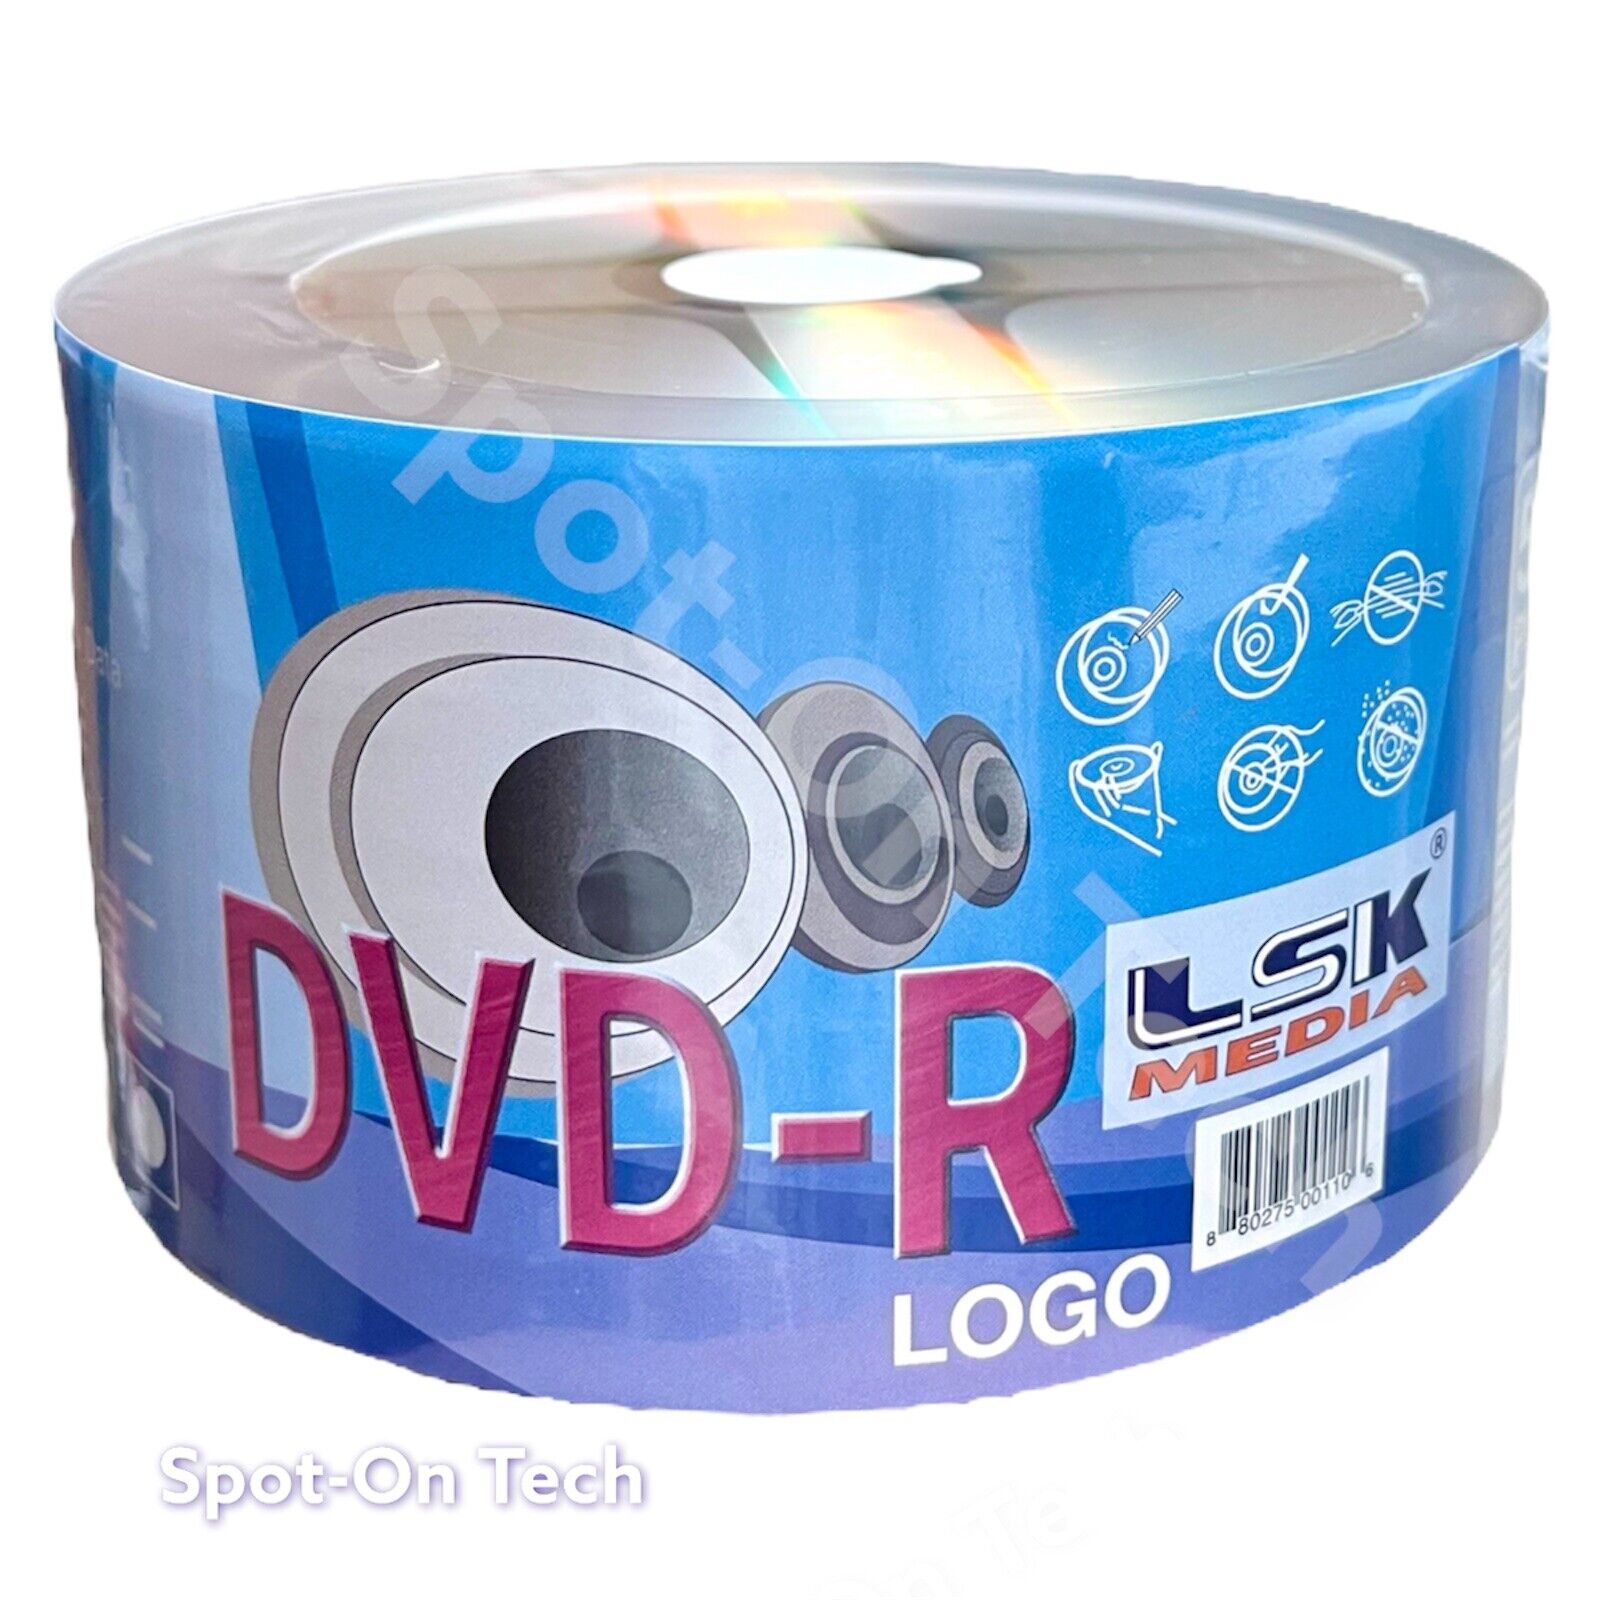 50 LSK MEDIA DVD DVD-R LOGO Blank Disc 16X 4.7GB/120Min Duplication Grade 1pk hp